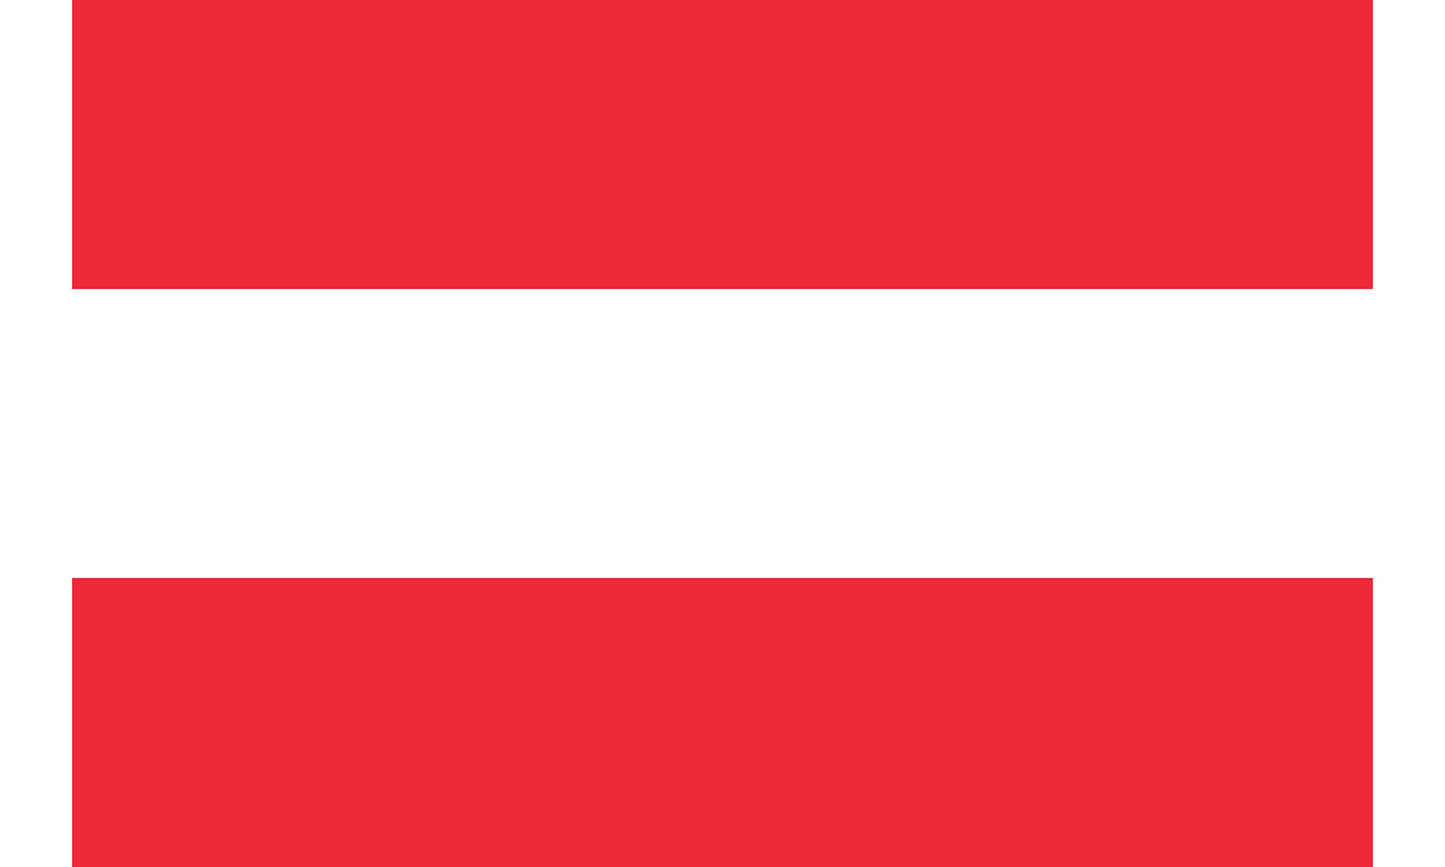 UF-AUS-150x90 - государственный флаг Австрии. Материал флага: полиэстер с бронзовыми кольцами, размер: 90 см х 150 см